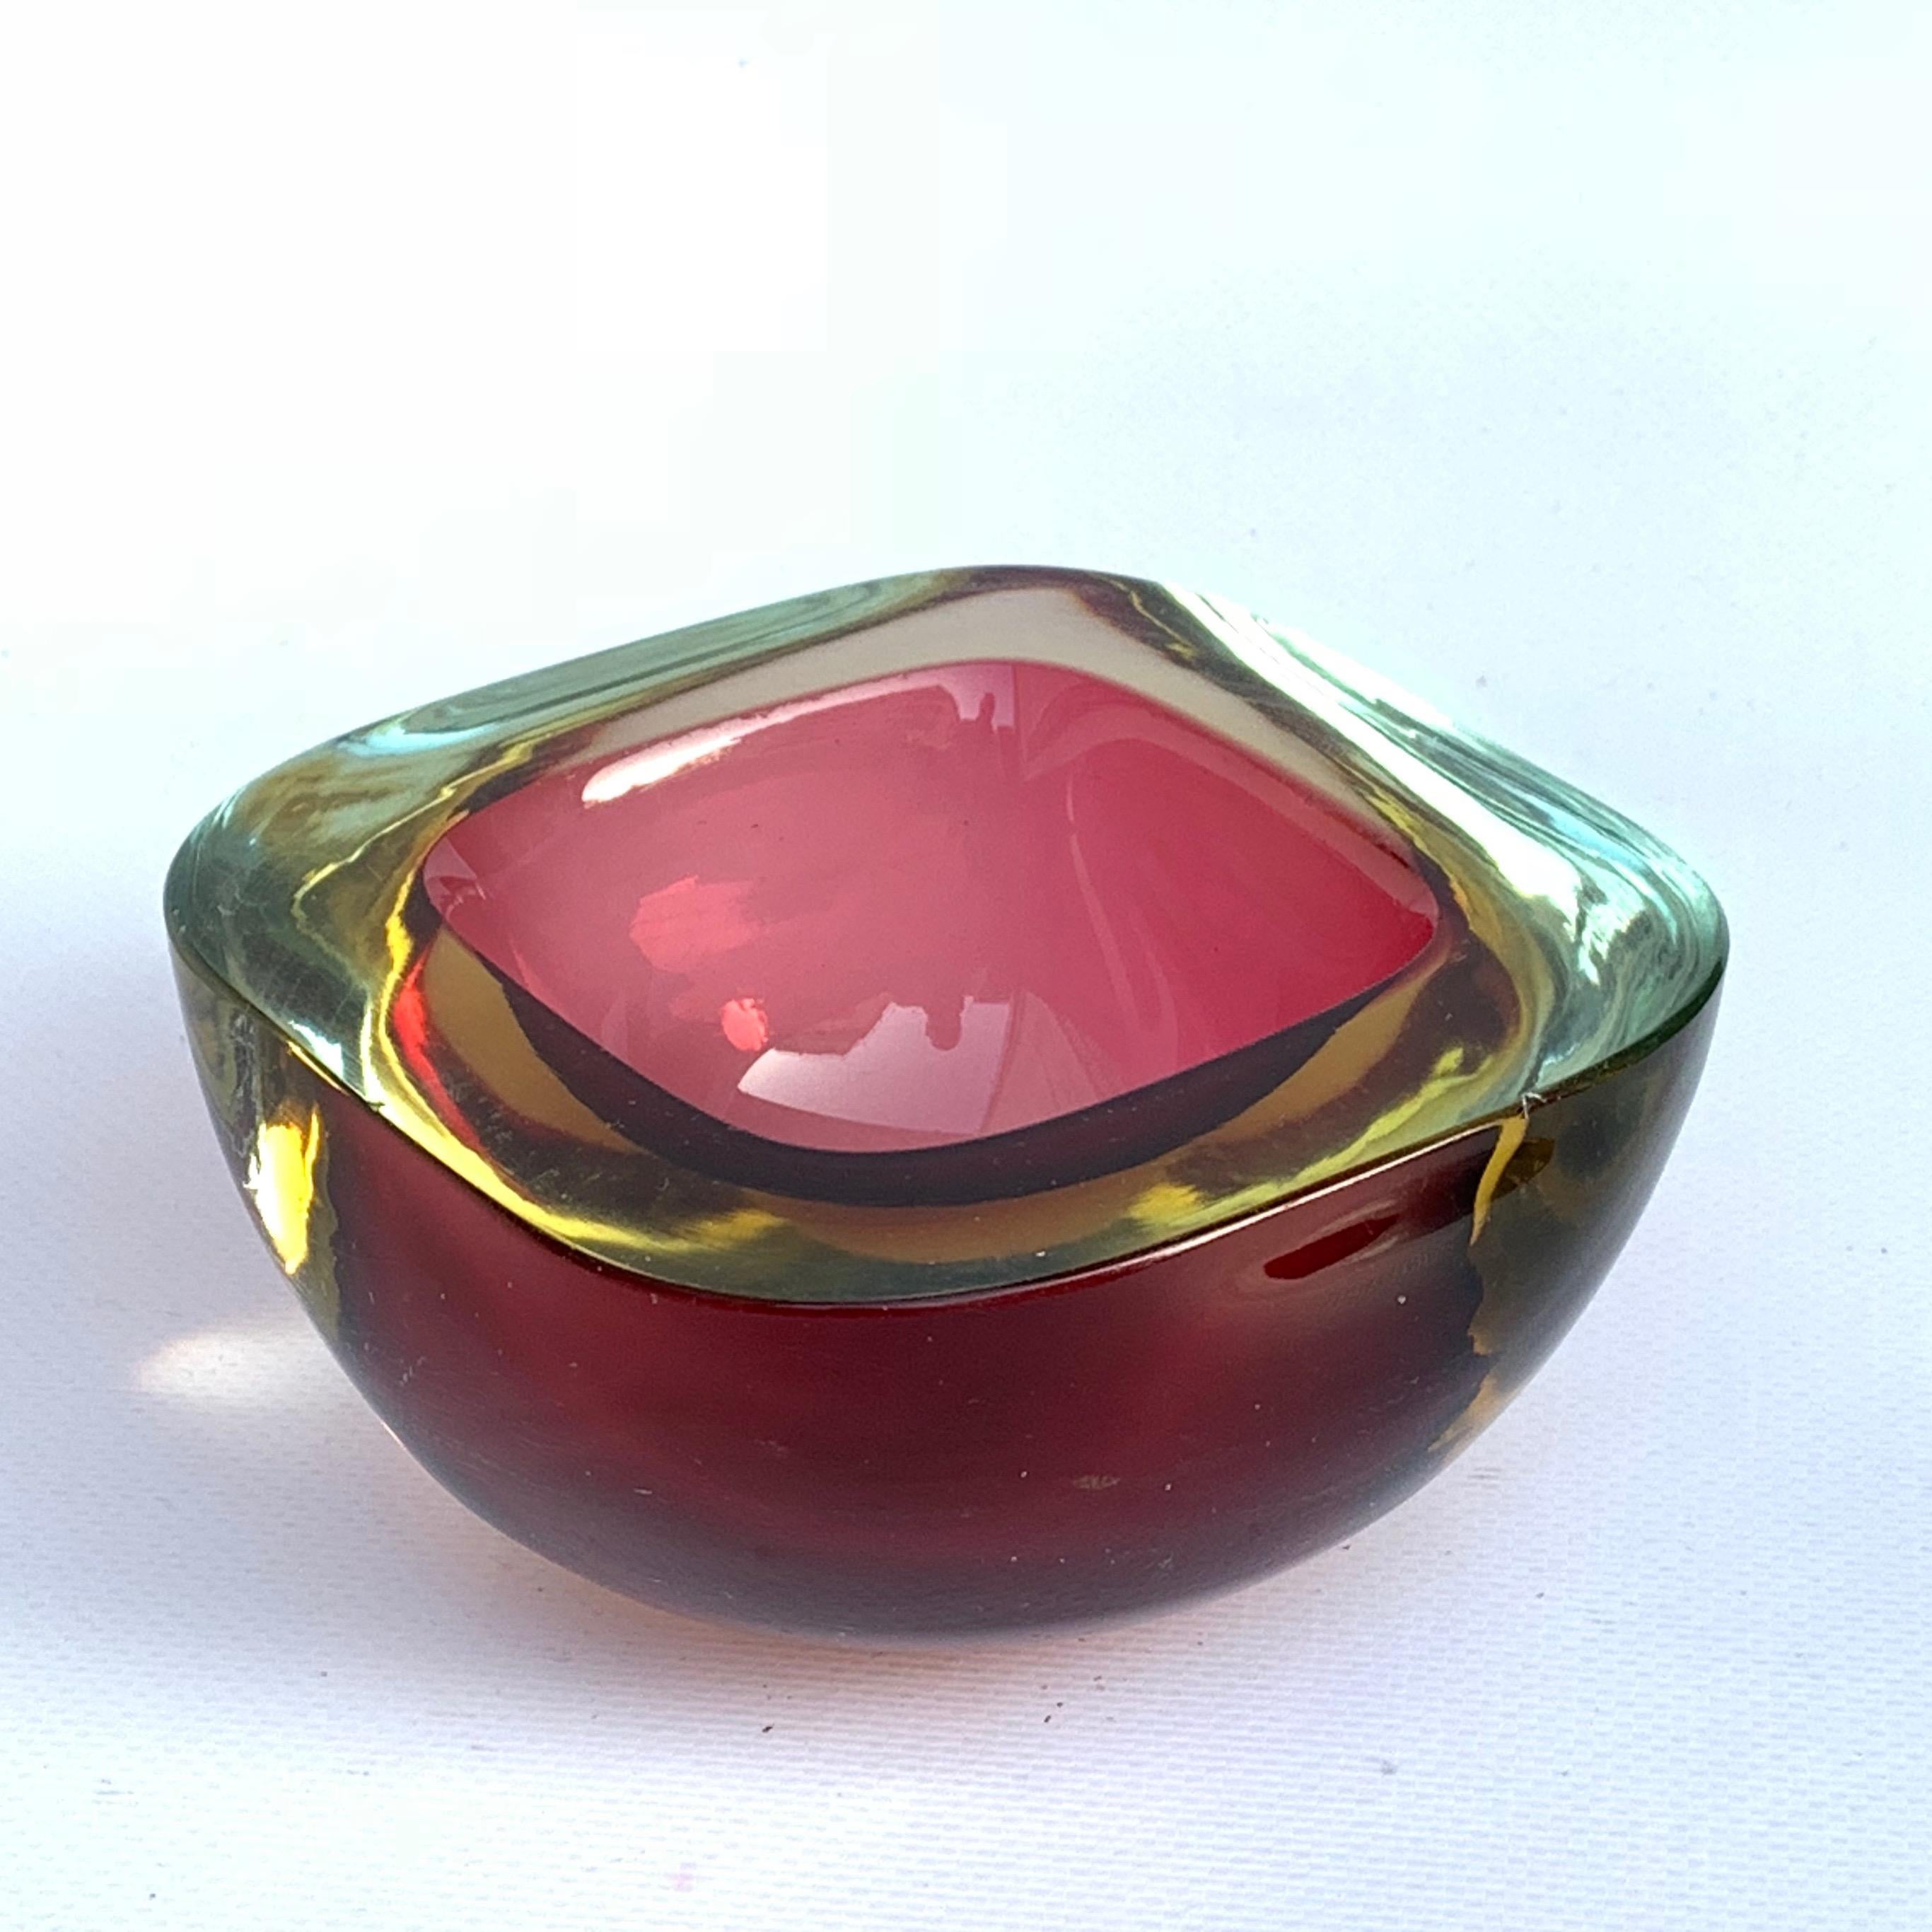 Murano ashtray, attributable to Flavio Poli, Vetro Sommerso. Red, glass, Italy, 1960s.

No chipping.